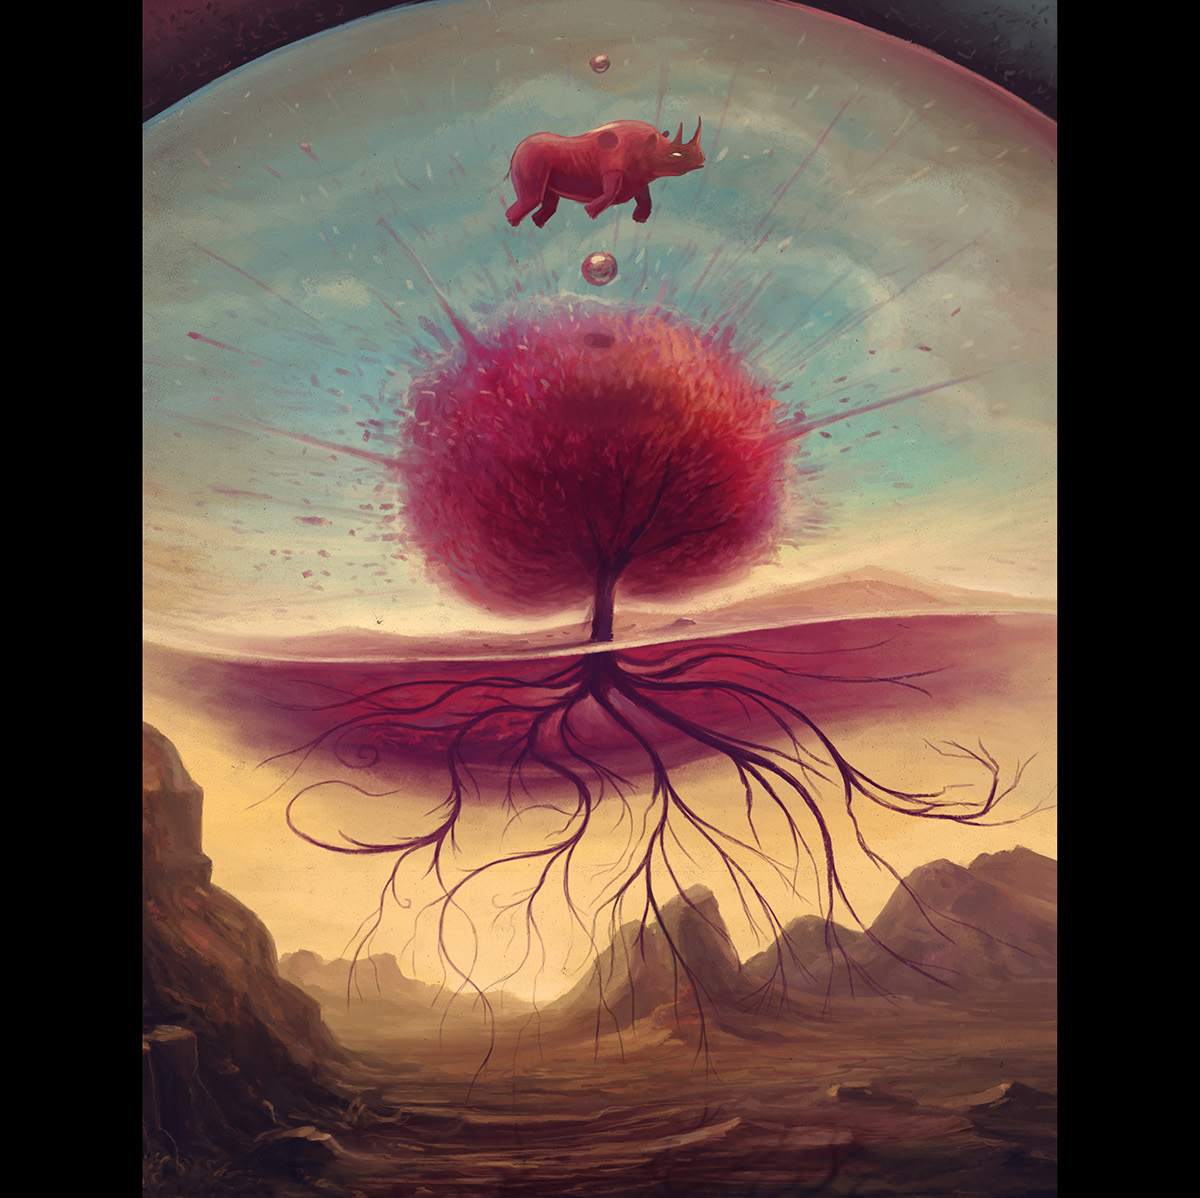 Rhino surreal surrealism desert Exhibition  levitation roots Tree  red salvador dali sphere cover book wacom